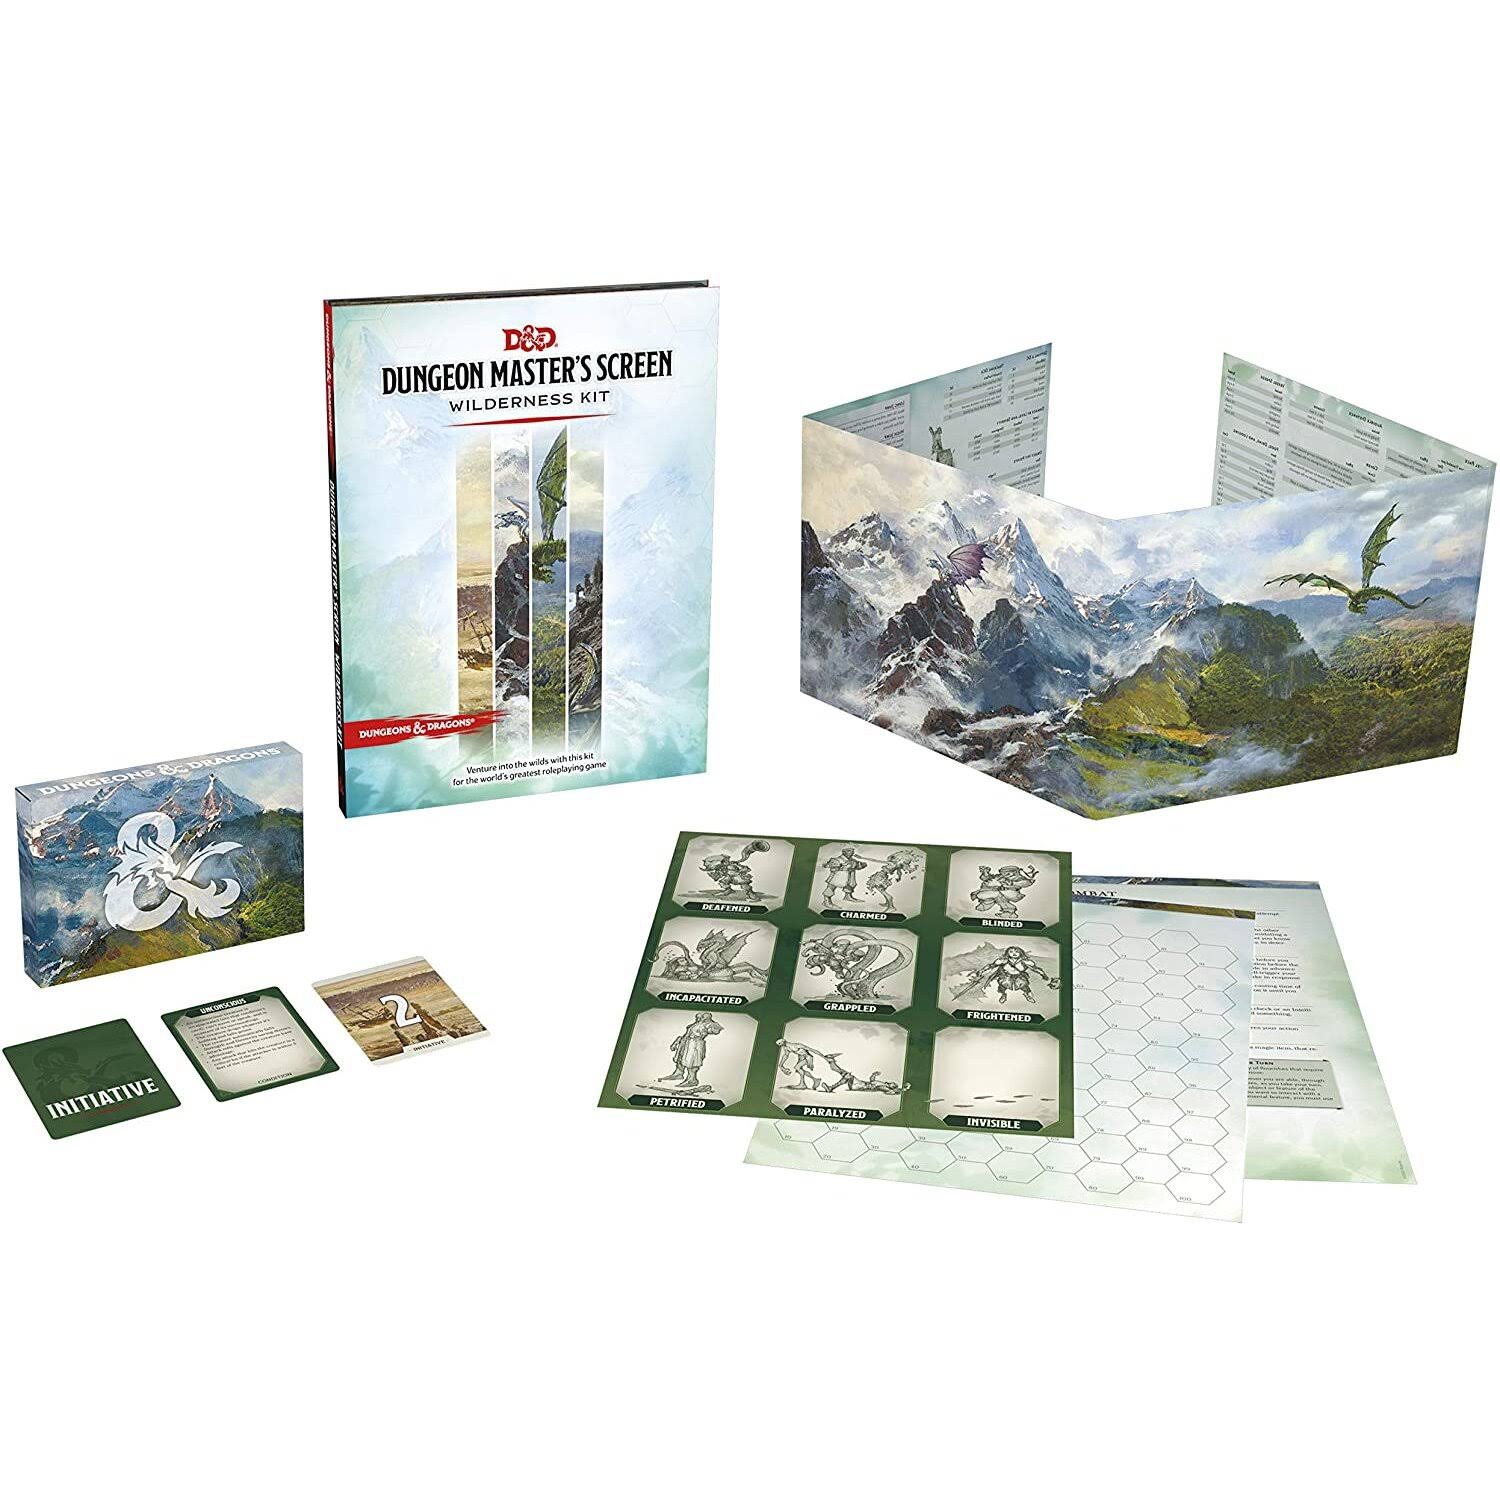 Dungeons & Dragons Dungeon Master's Screen - Wilderness Kit